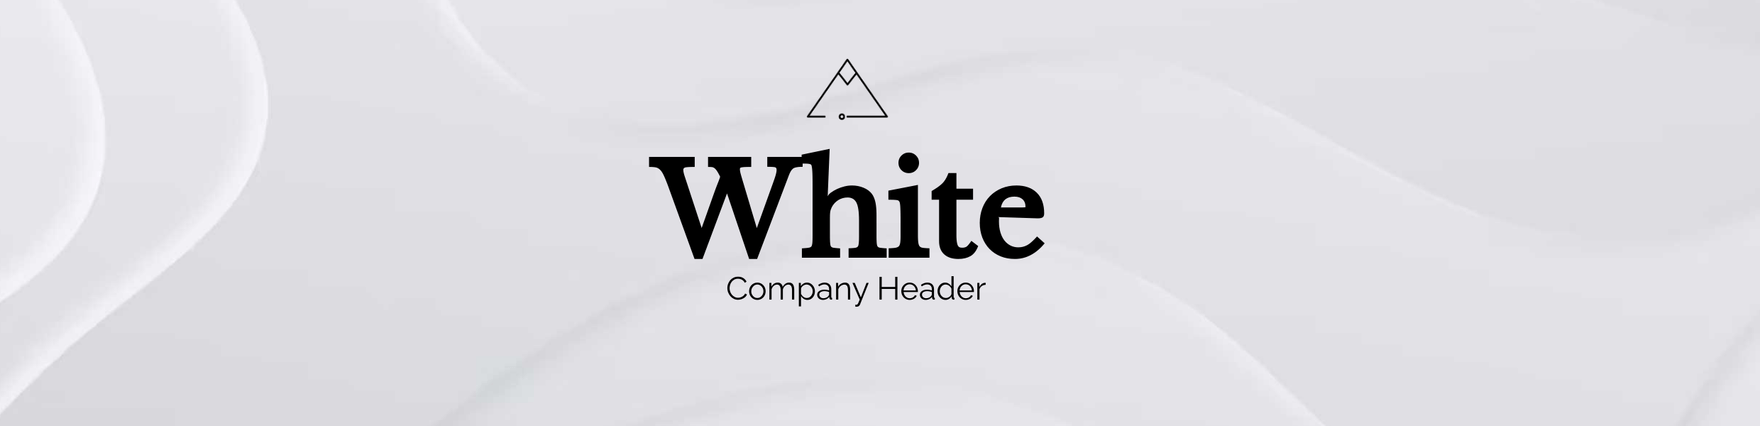 White Company Header Template